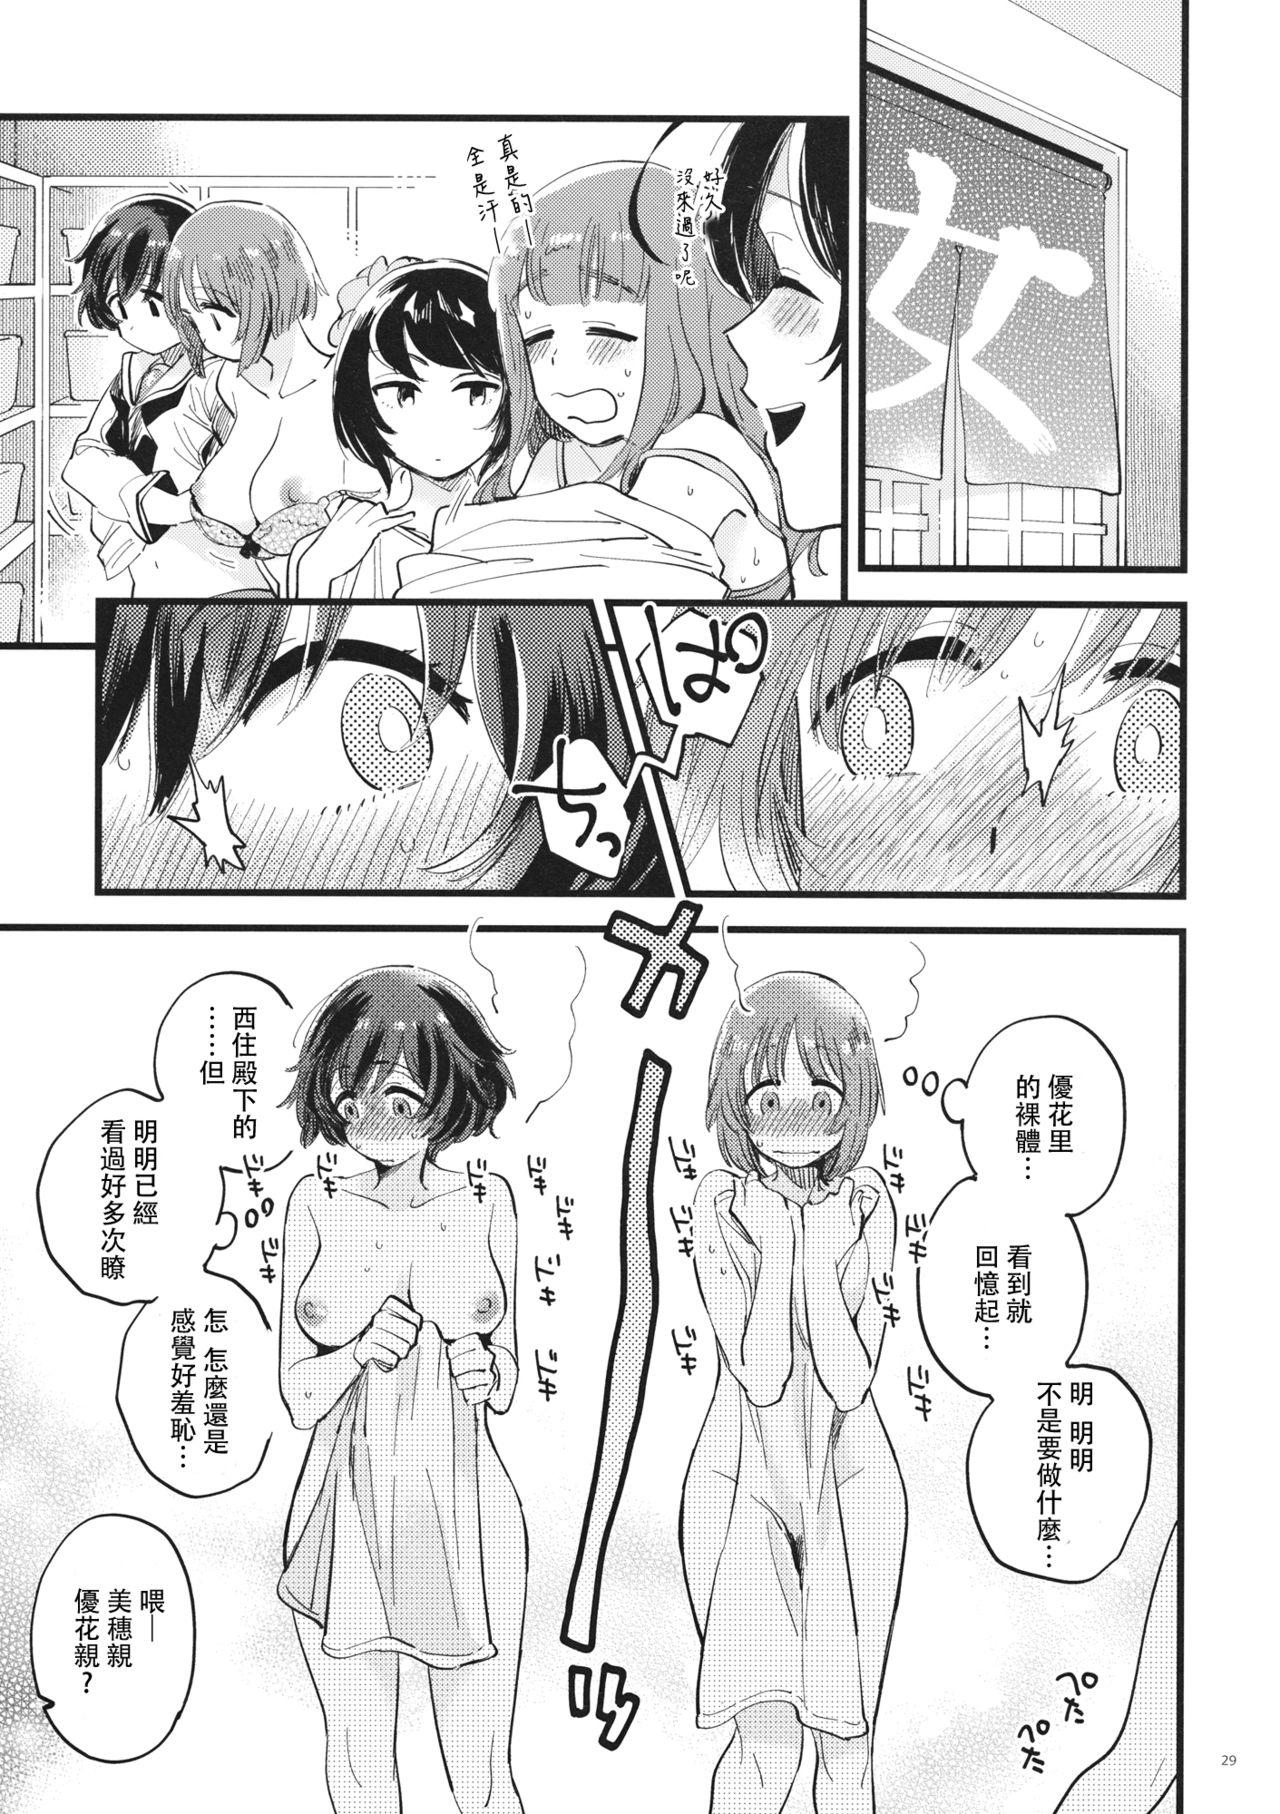 Aunt Yasashiku, Sawatte, Oku made Furete. - Girls und panzer Mulher - Page 29